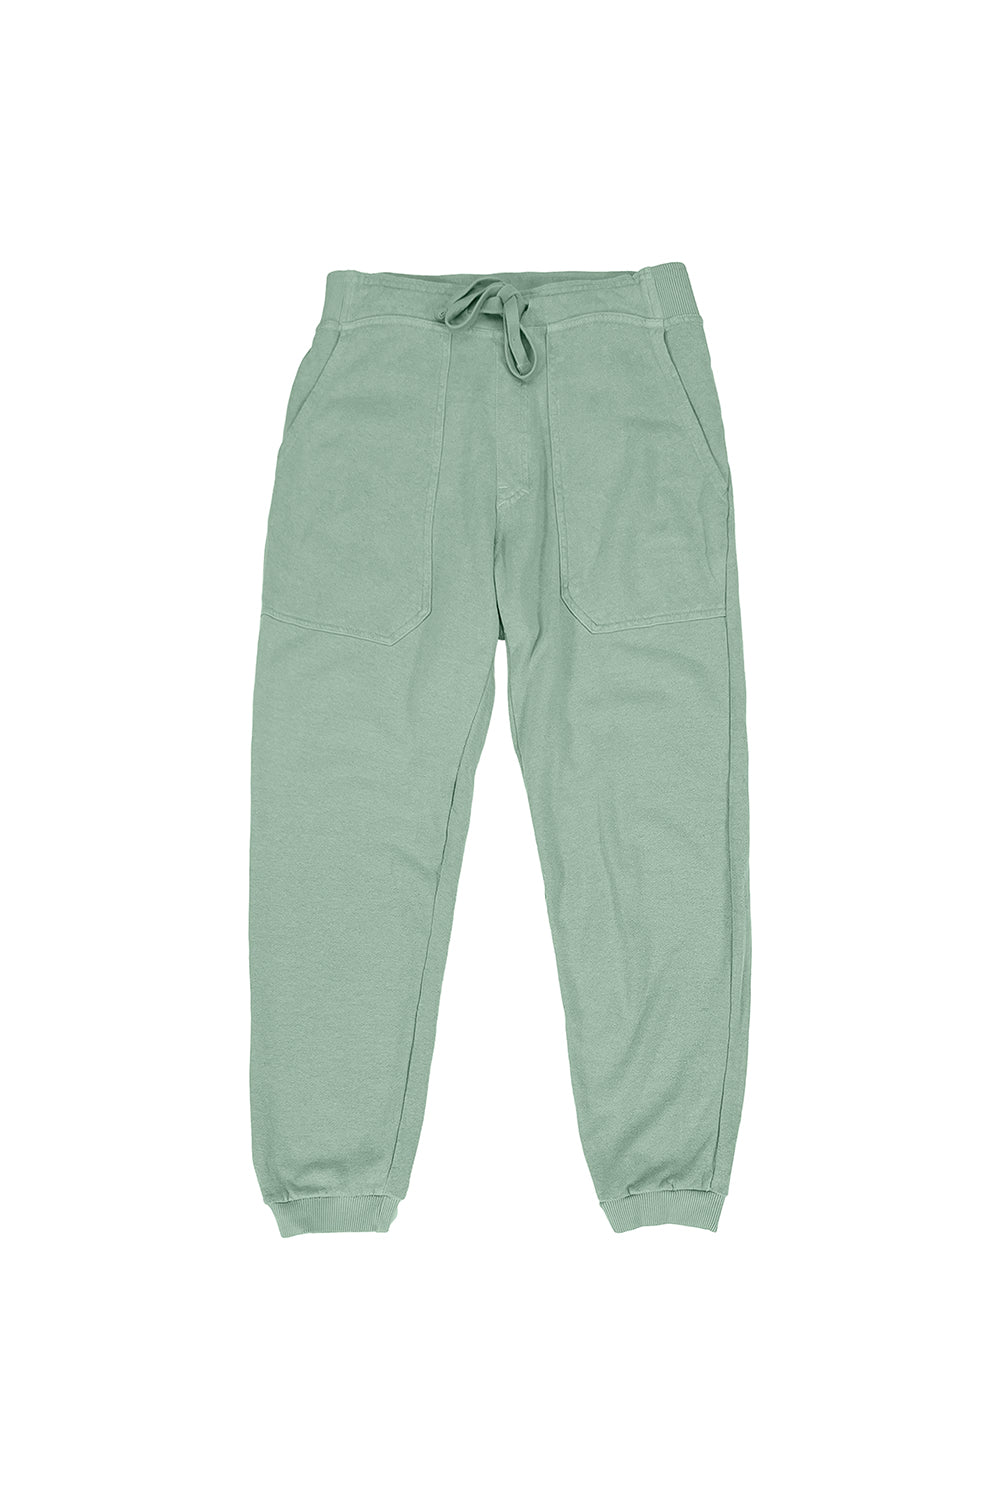 Rockaway Sweatpant | Jungmaven Hemp Clothing & Accessories / Color: Sage Green